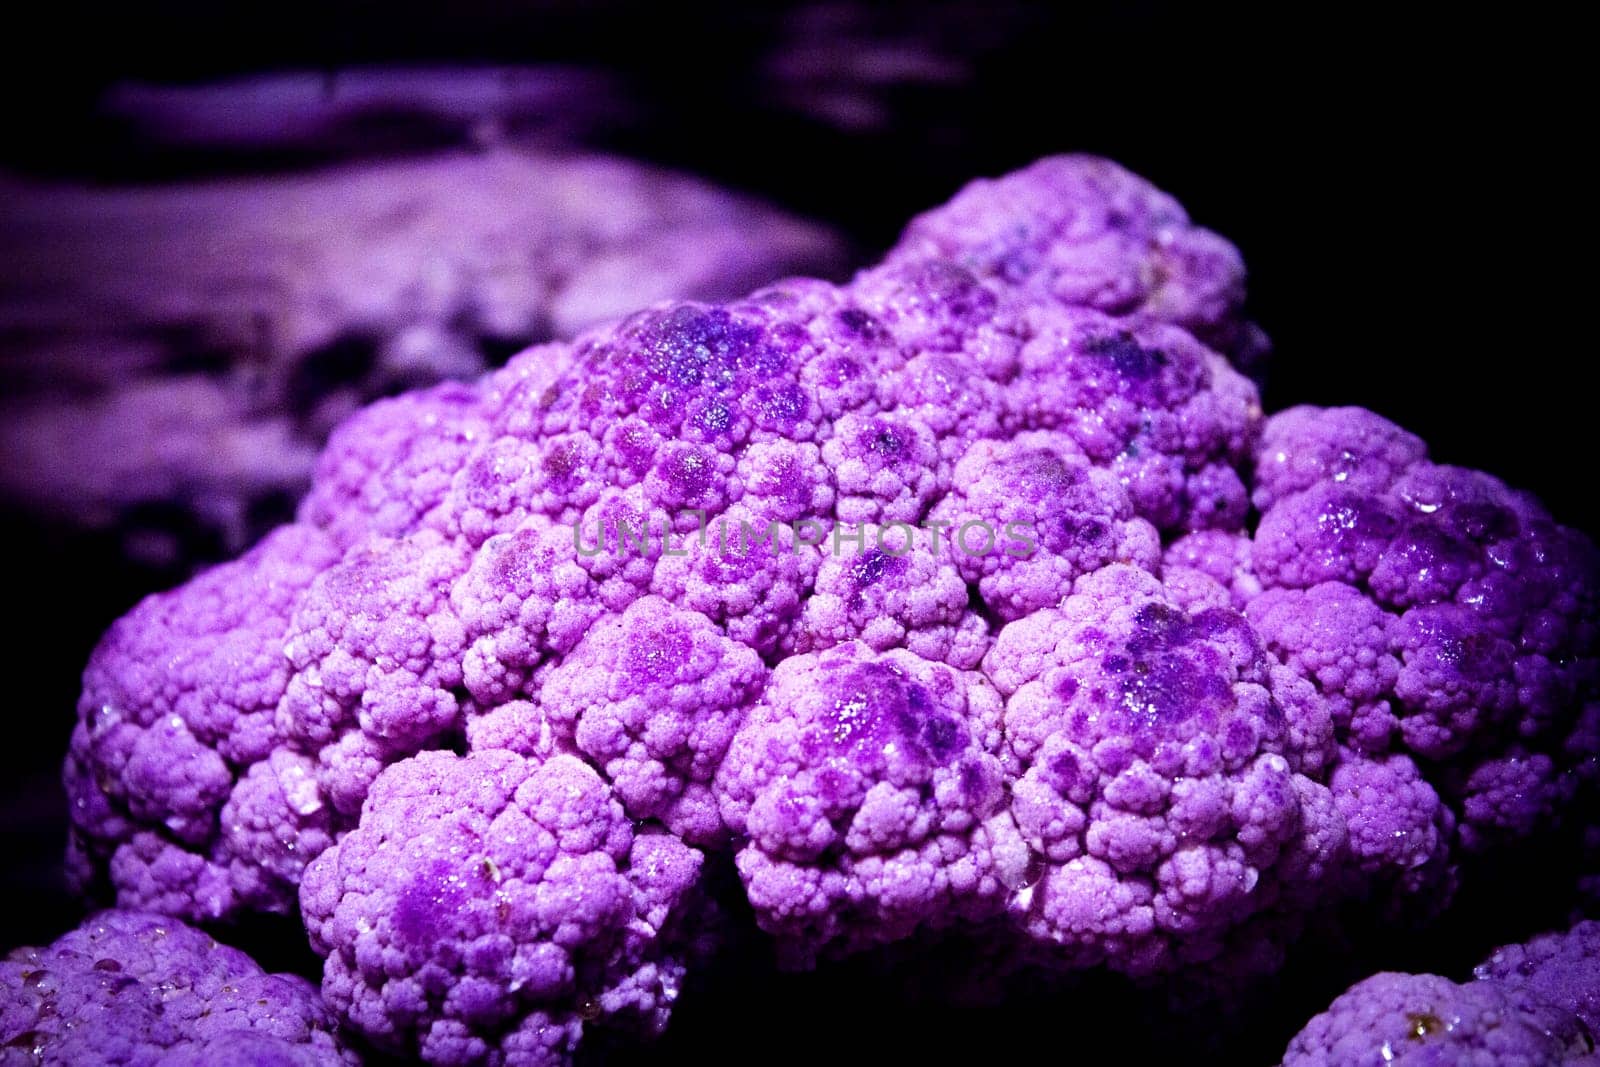 Raw purple cauliflower in a saucepan by GemaIbarra